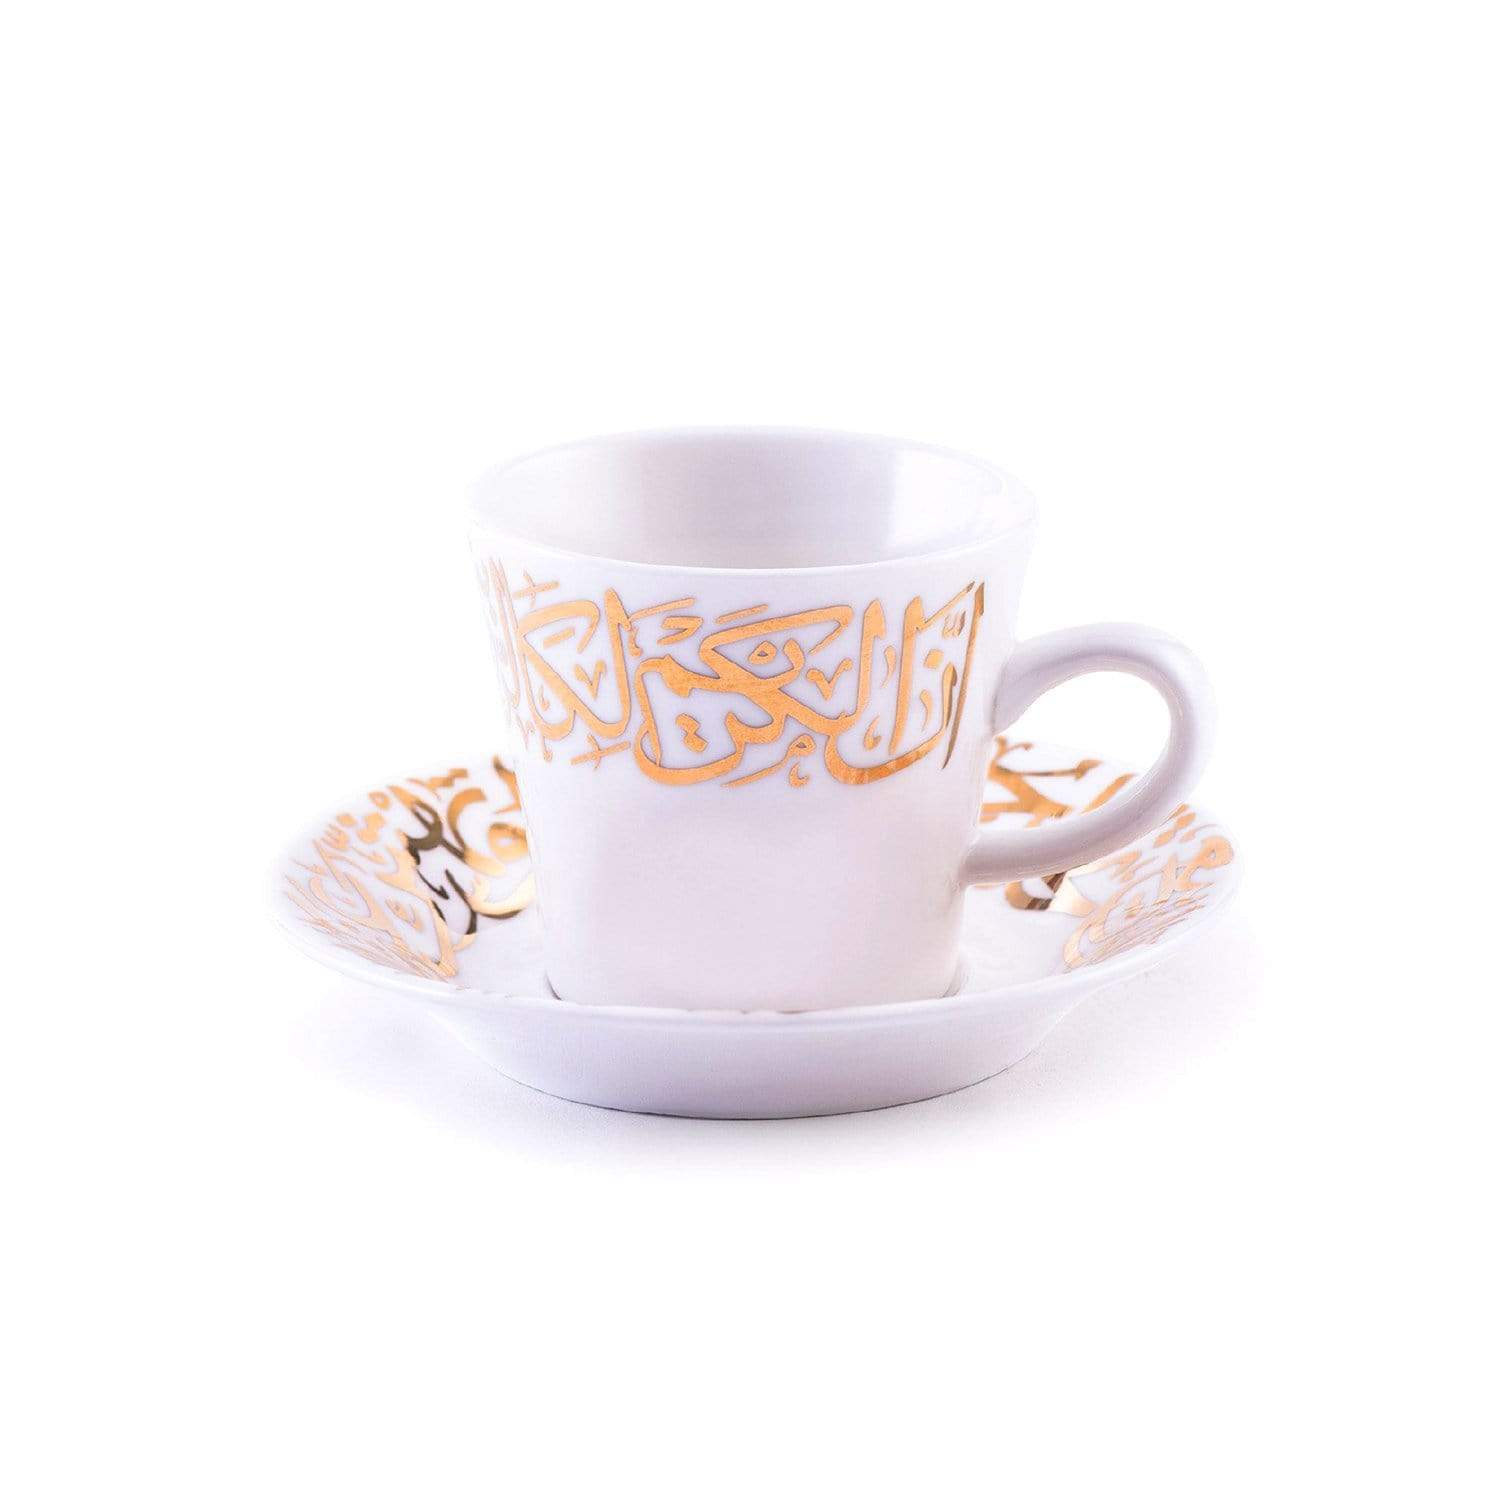 Dimlaj كريم فنجان القهوة ومجموعة الصحن - الأبيض والذهبي، 12 قطعة - 46666 - Jashanmal الرئيسية